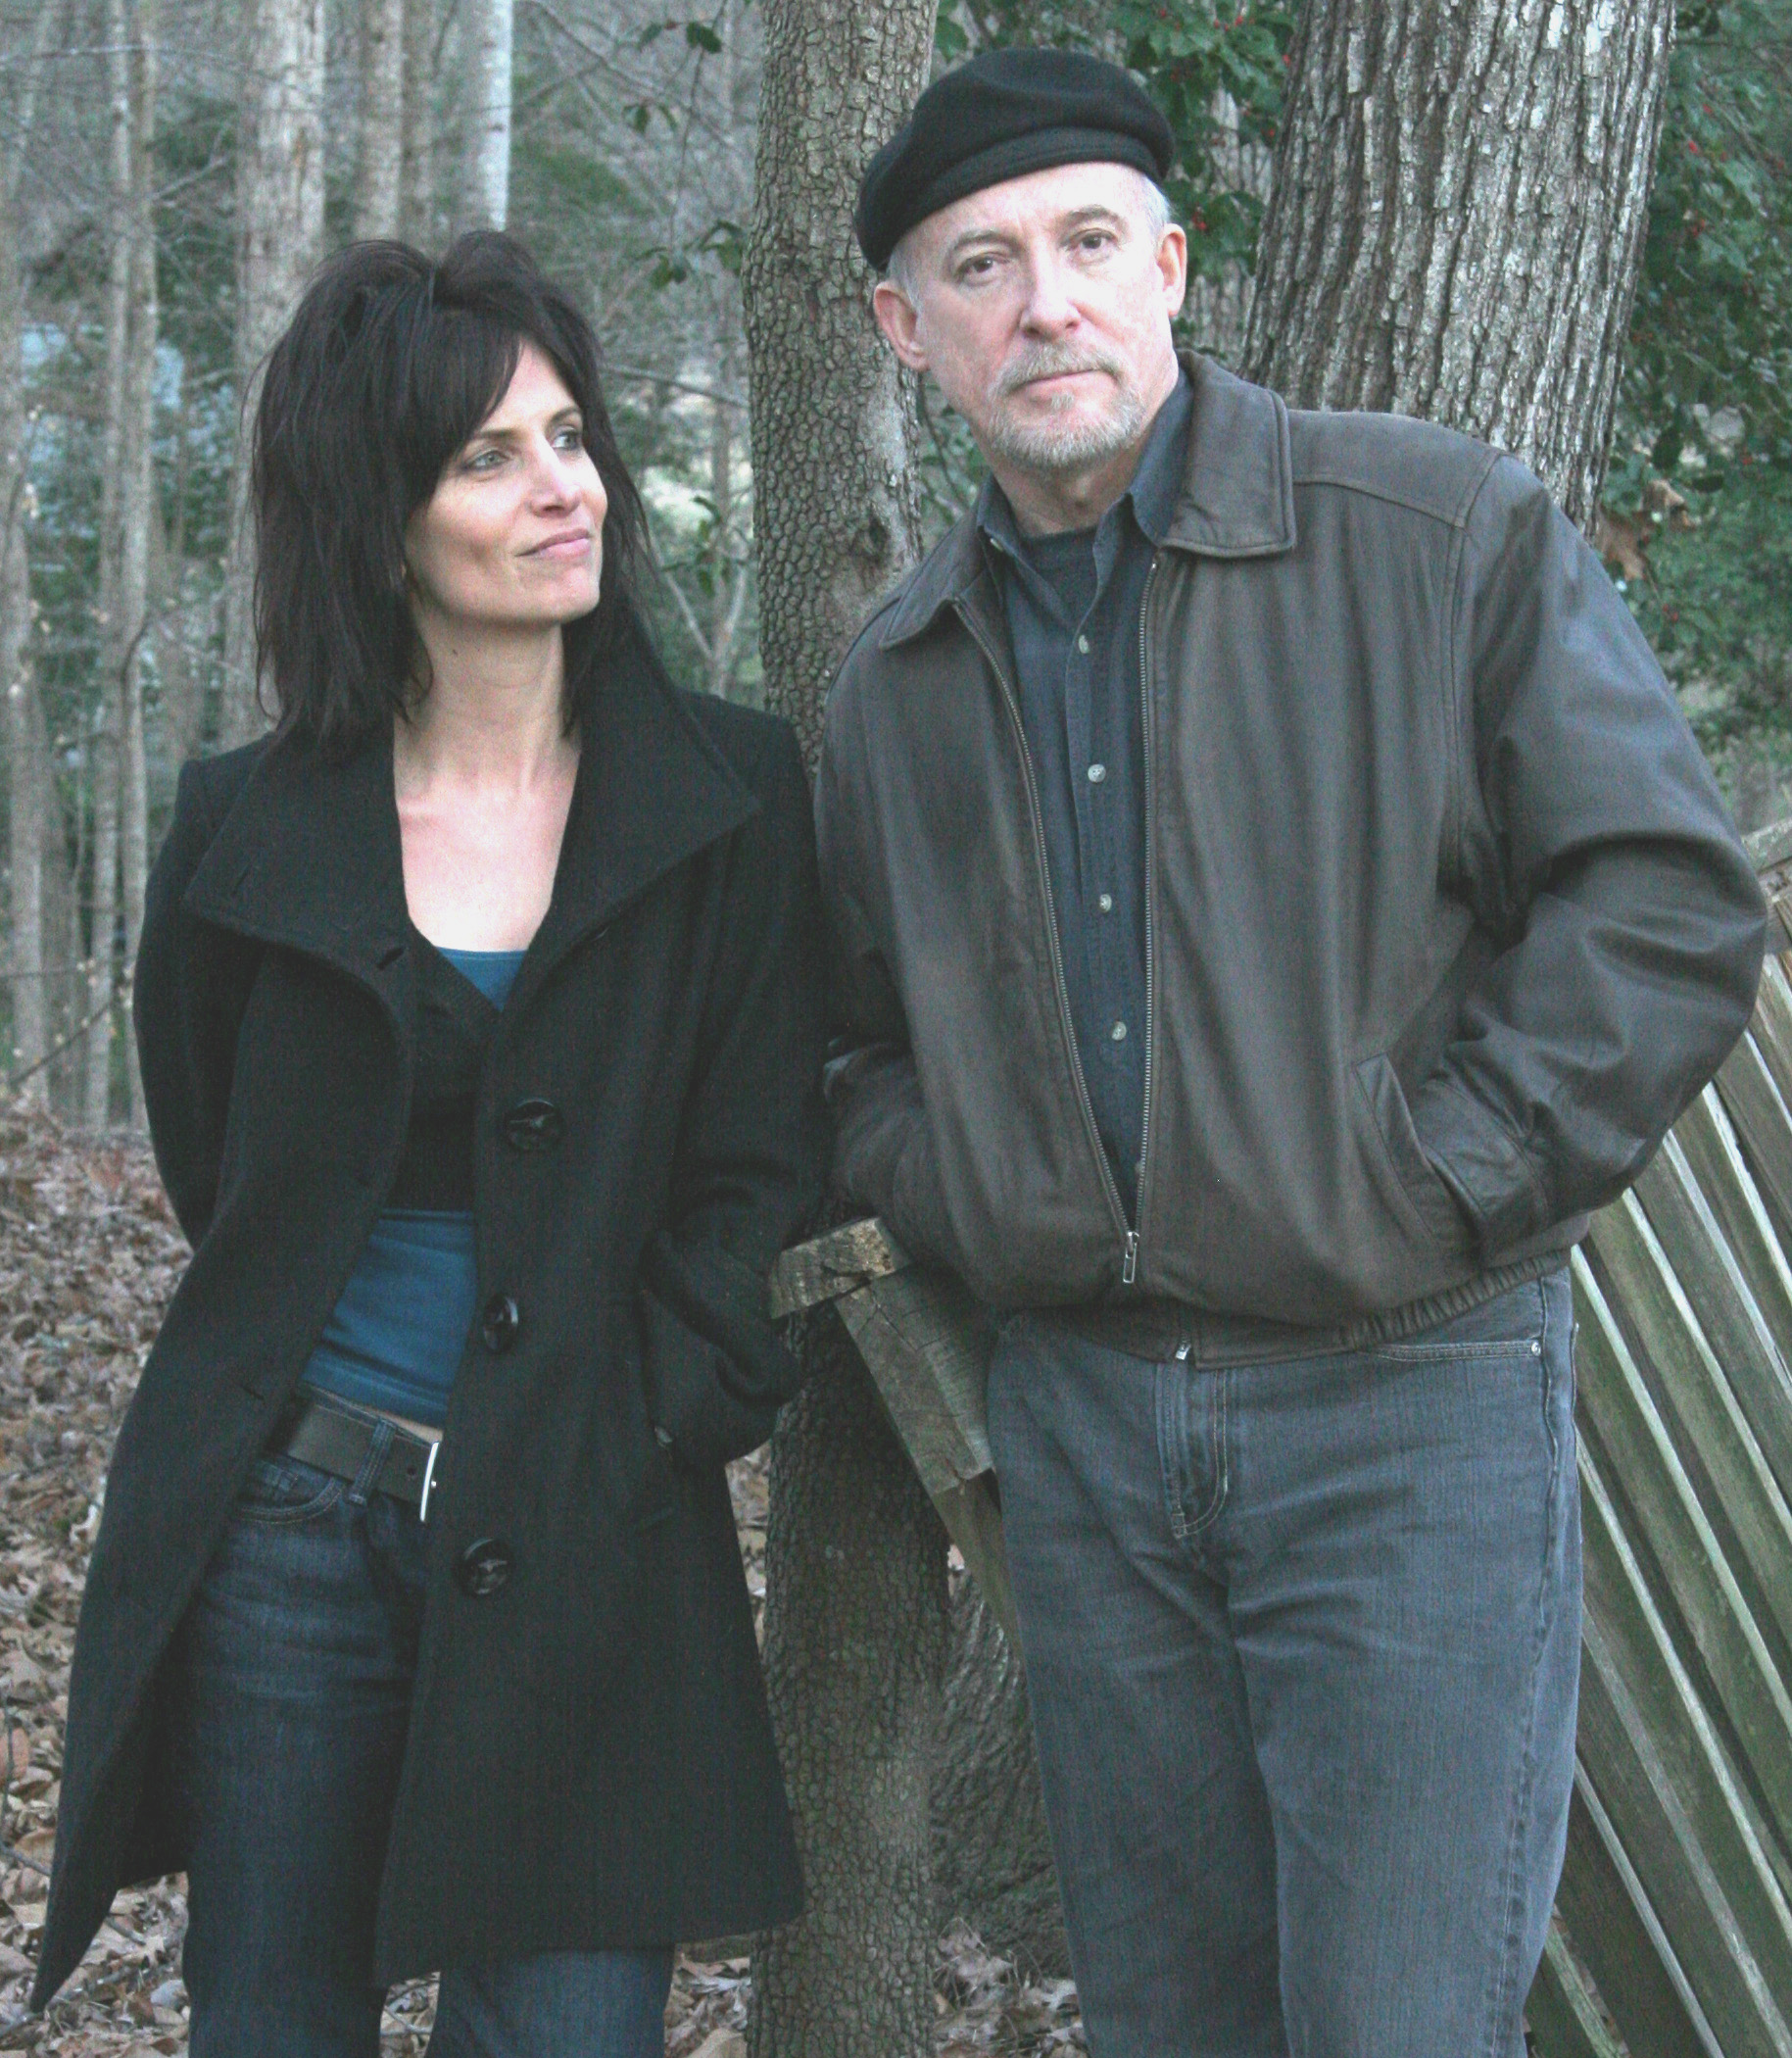 Ron Hipp and Carol Statella